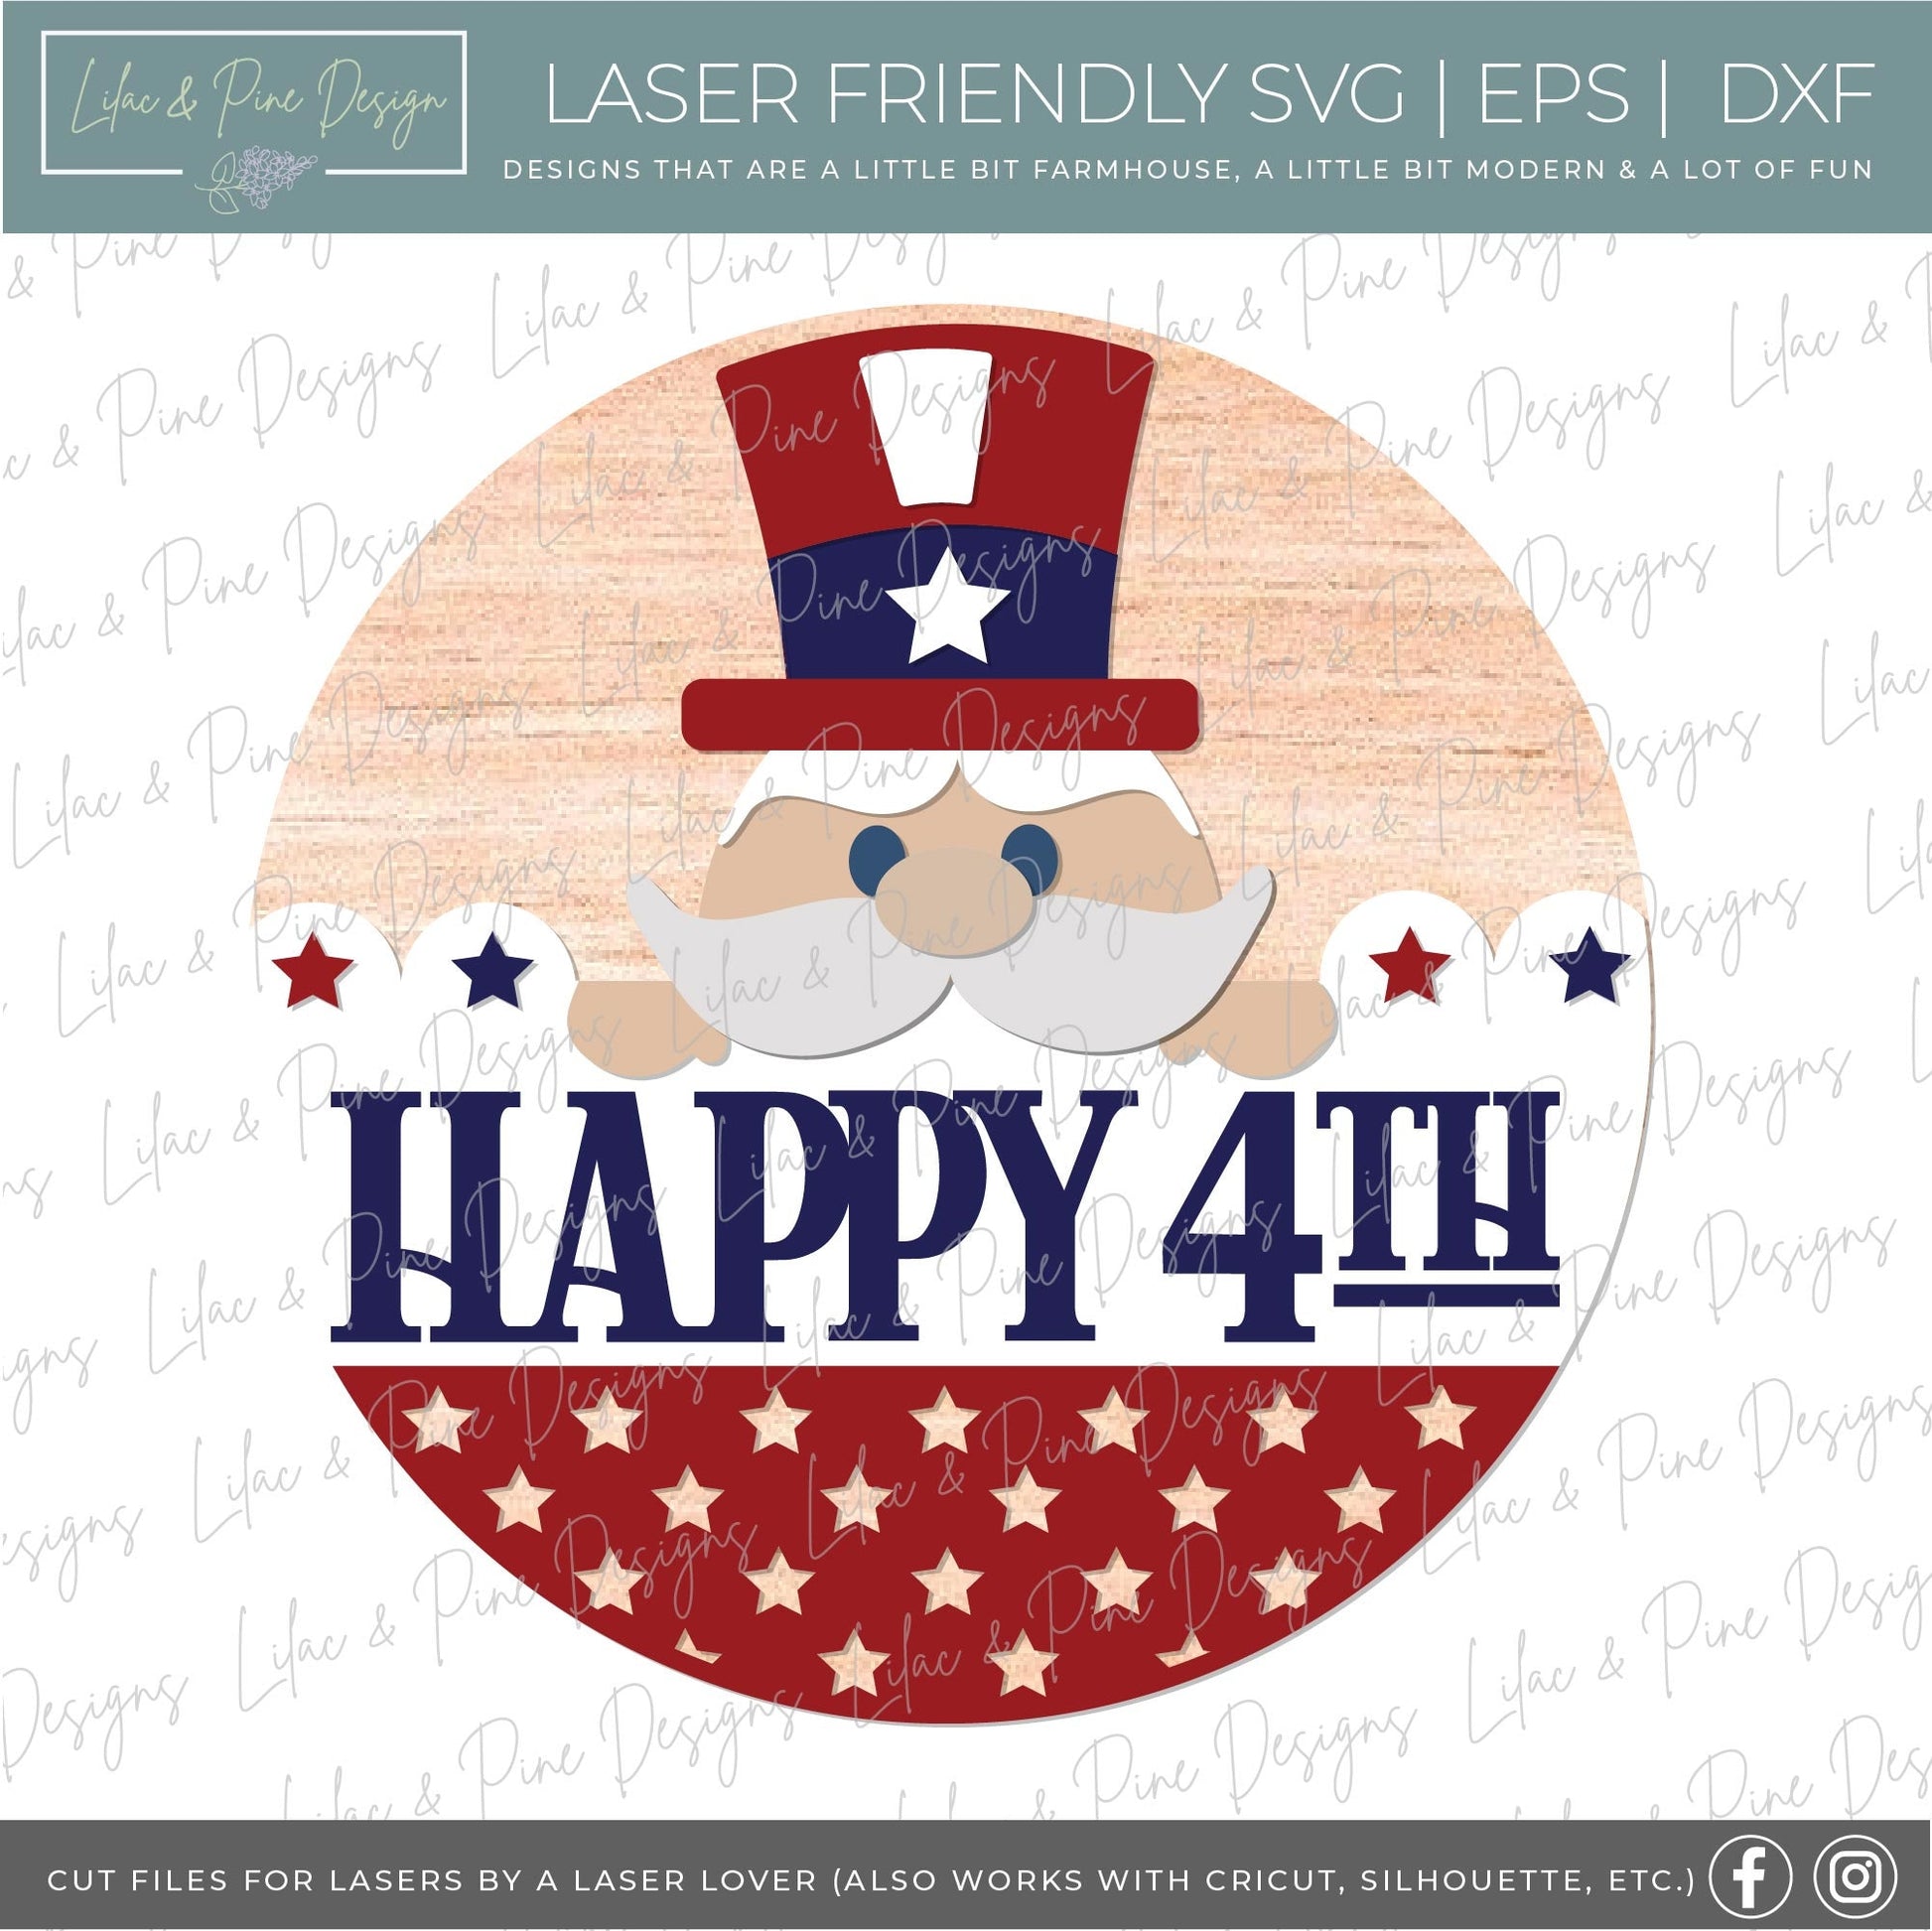 Uncle Sam door hanger SVG, Happy 4th of July welcome sign, Fourth of July decor, Patriotic round sign SVG, Glowforge SVG, laser cut file